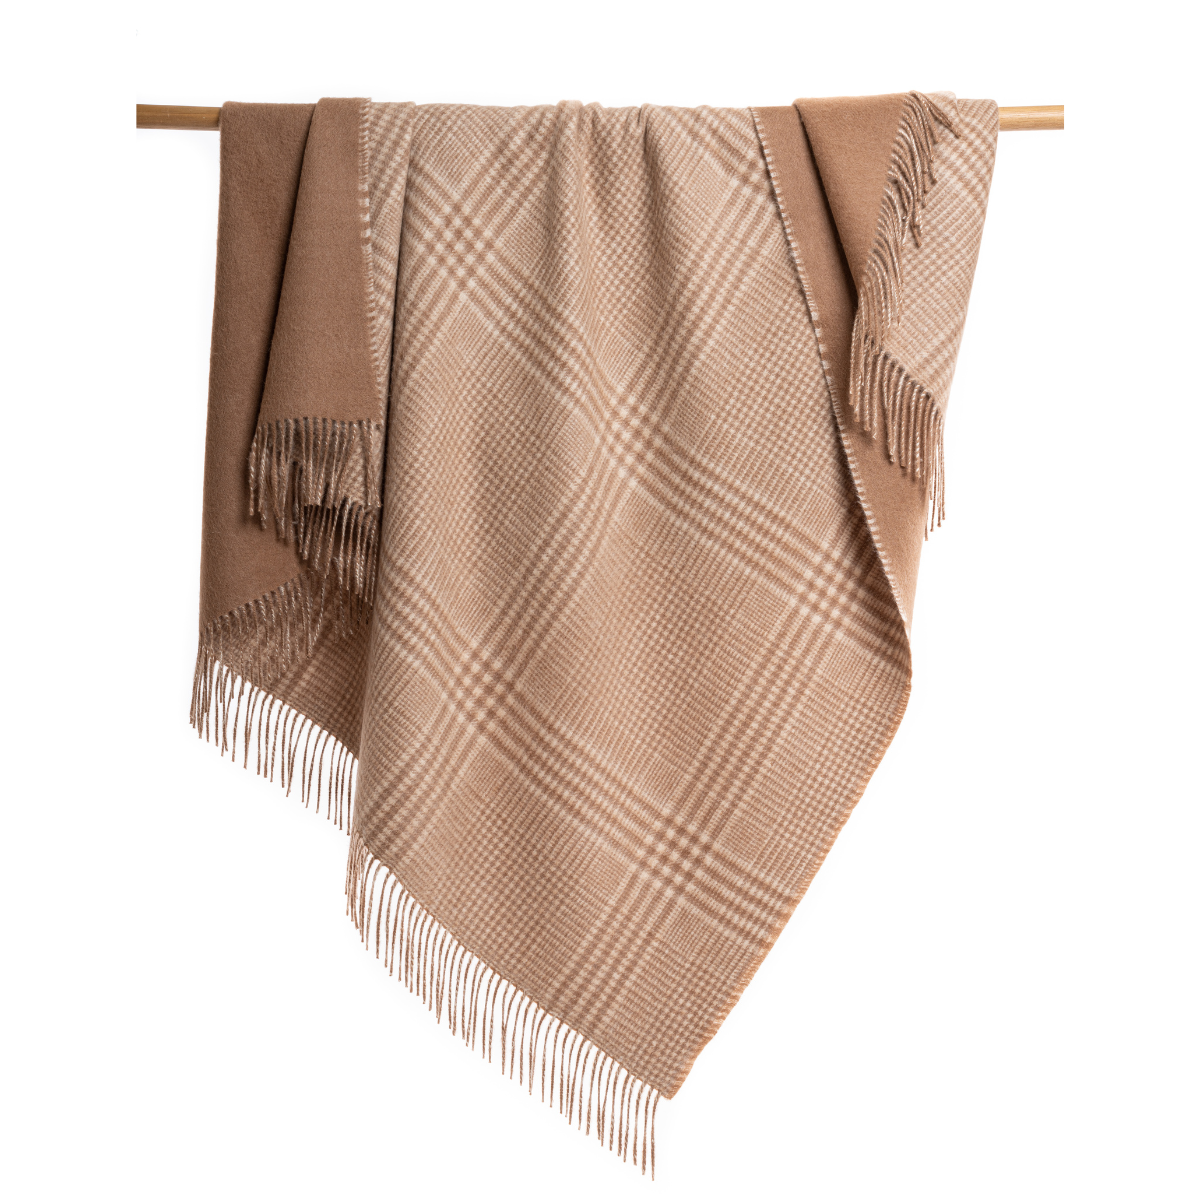 An Alpacas of Montana soft cozy luxury warm chestnut brown plaid blanket with a tasseled edge.